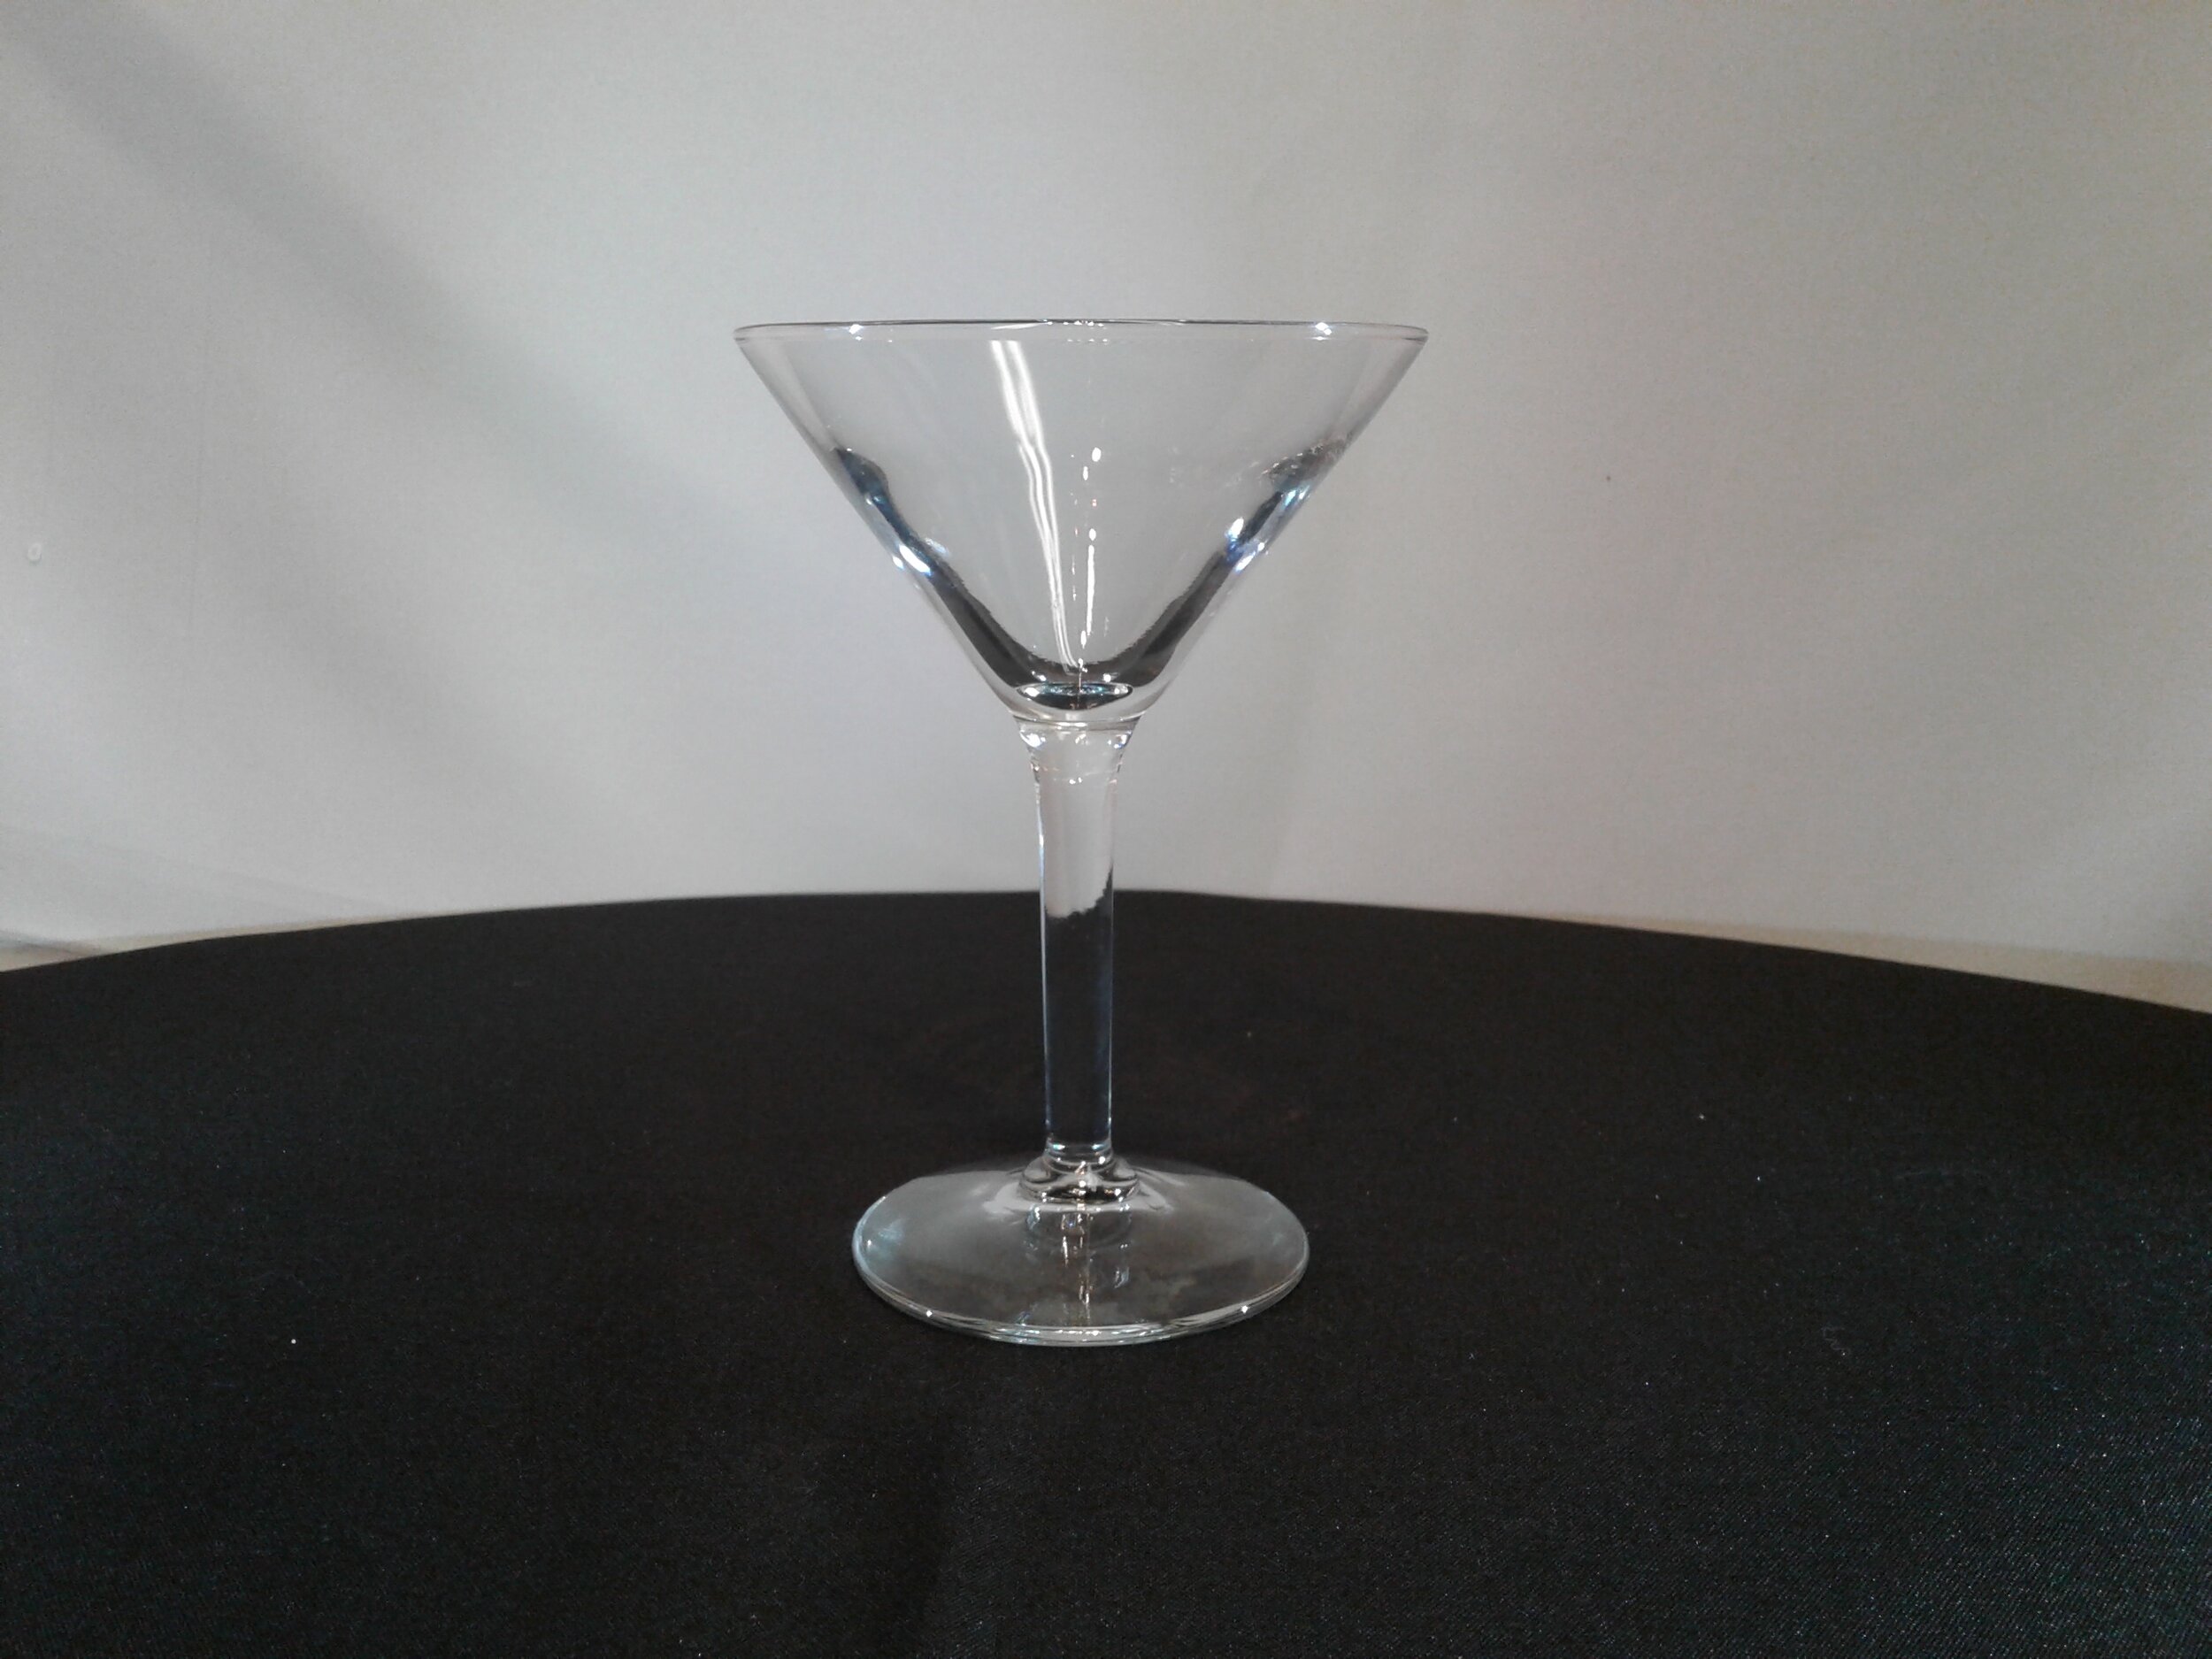 Martini Glass, $2.00 / day